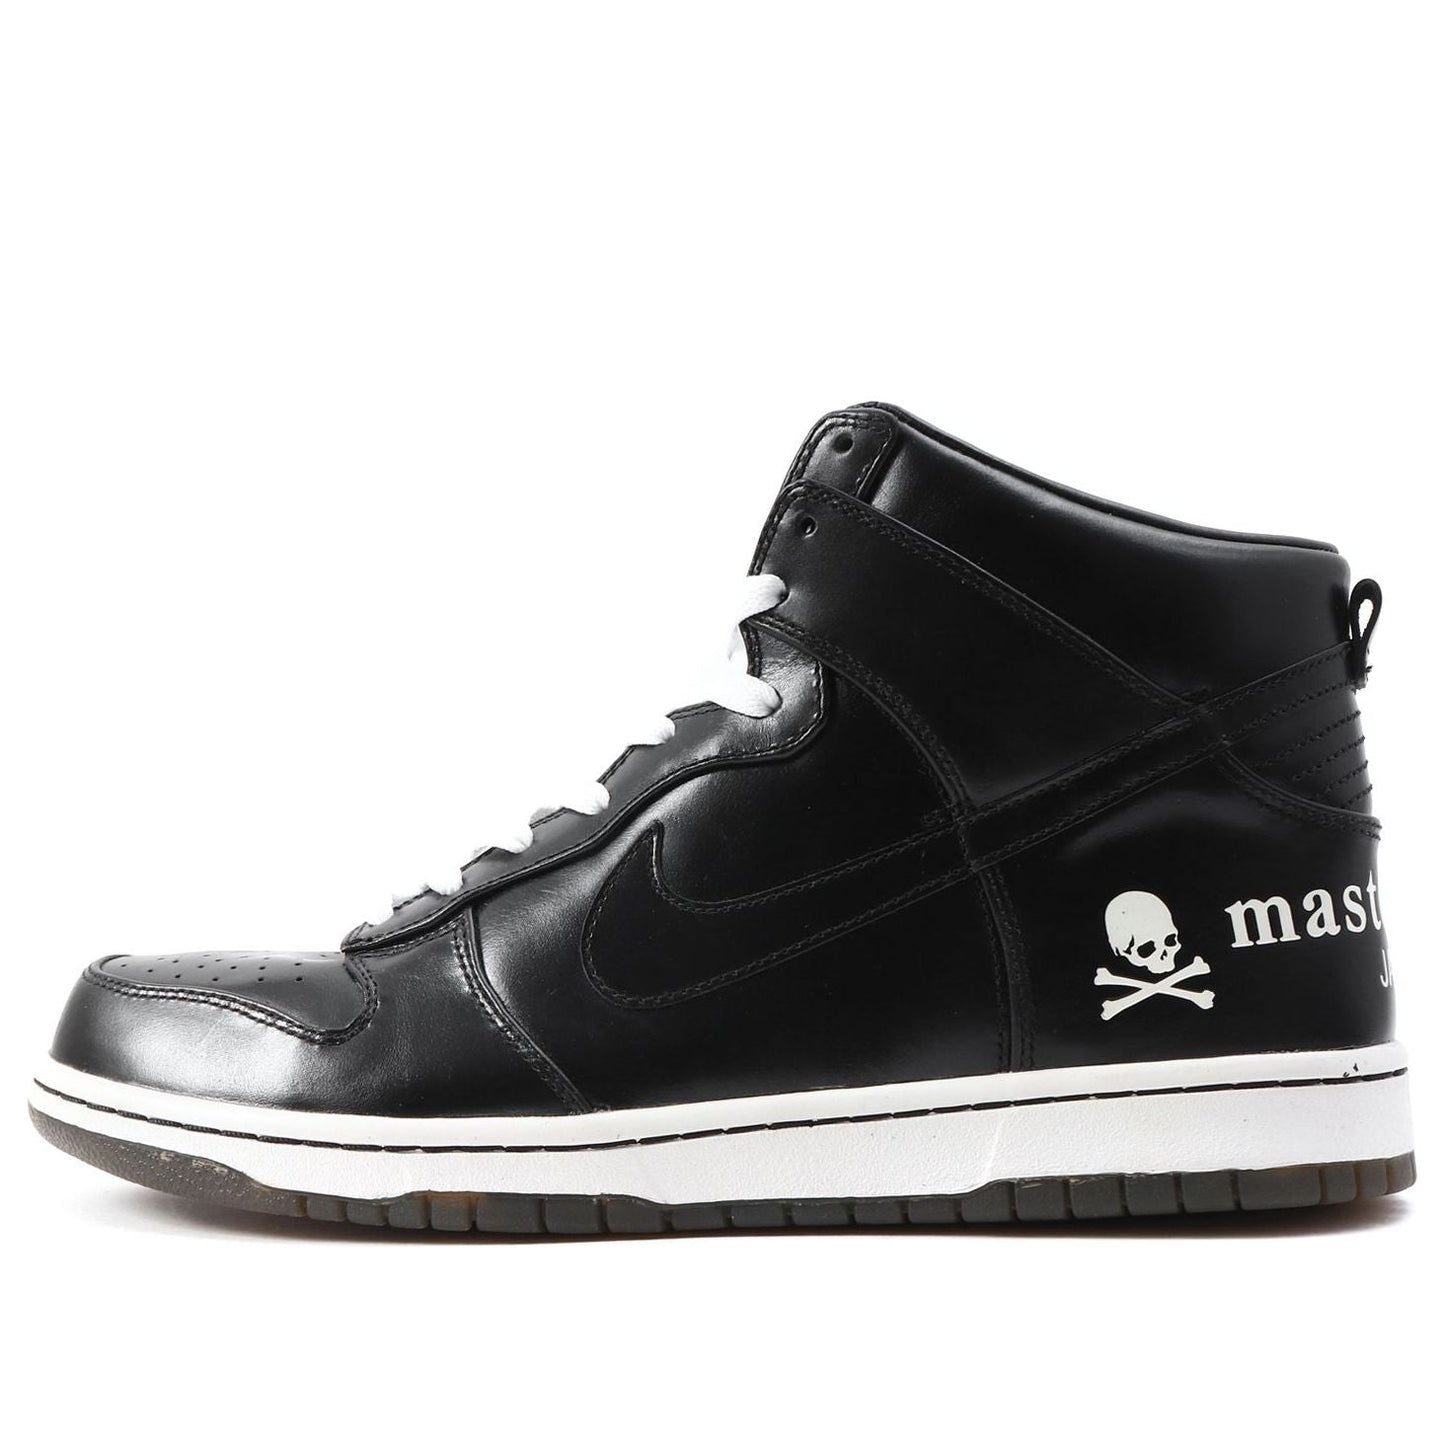 Nike Dunk Prm High MMJ NRG 'Mastermind'  583221-090 Signature Shoe